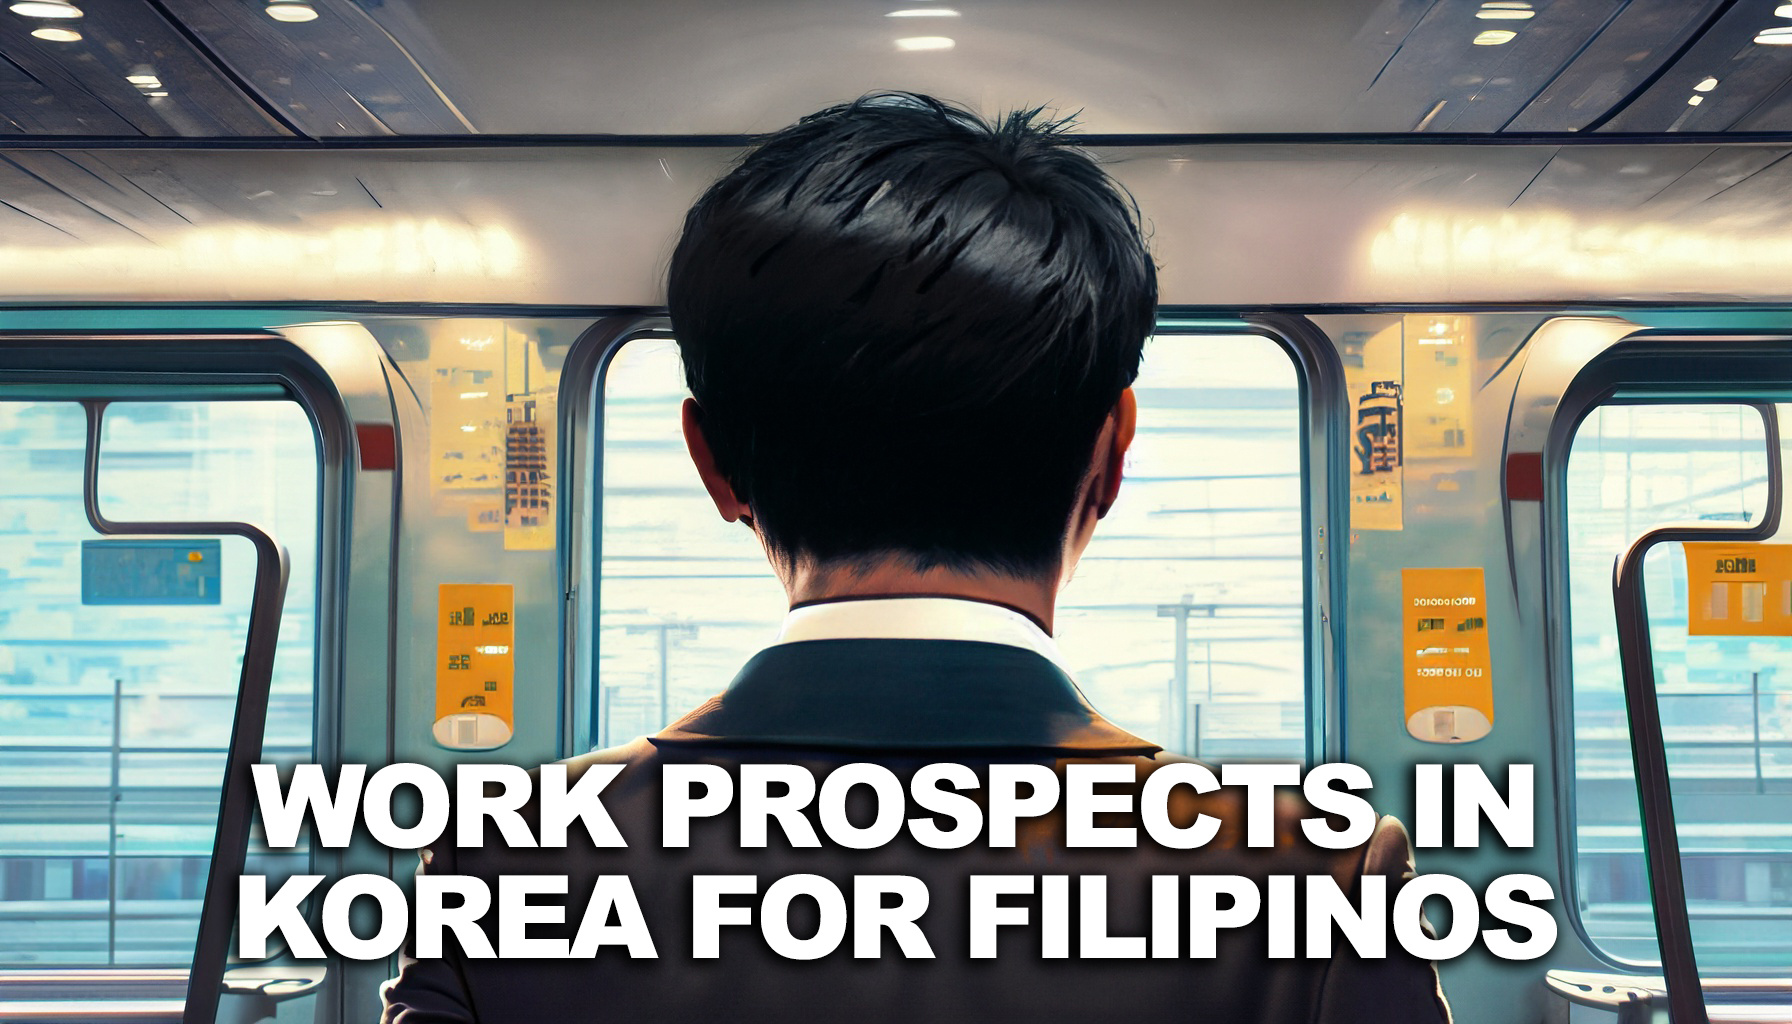 Work Prospects in Korea for Filipinos.jpg